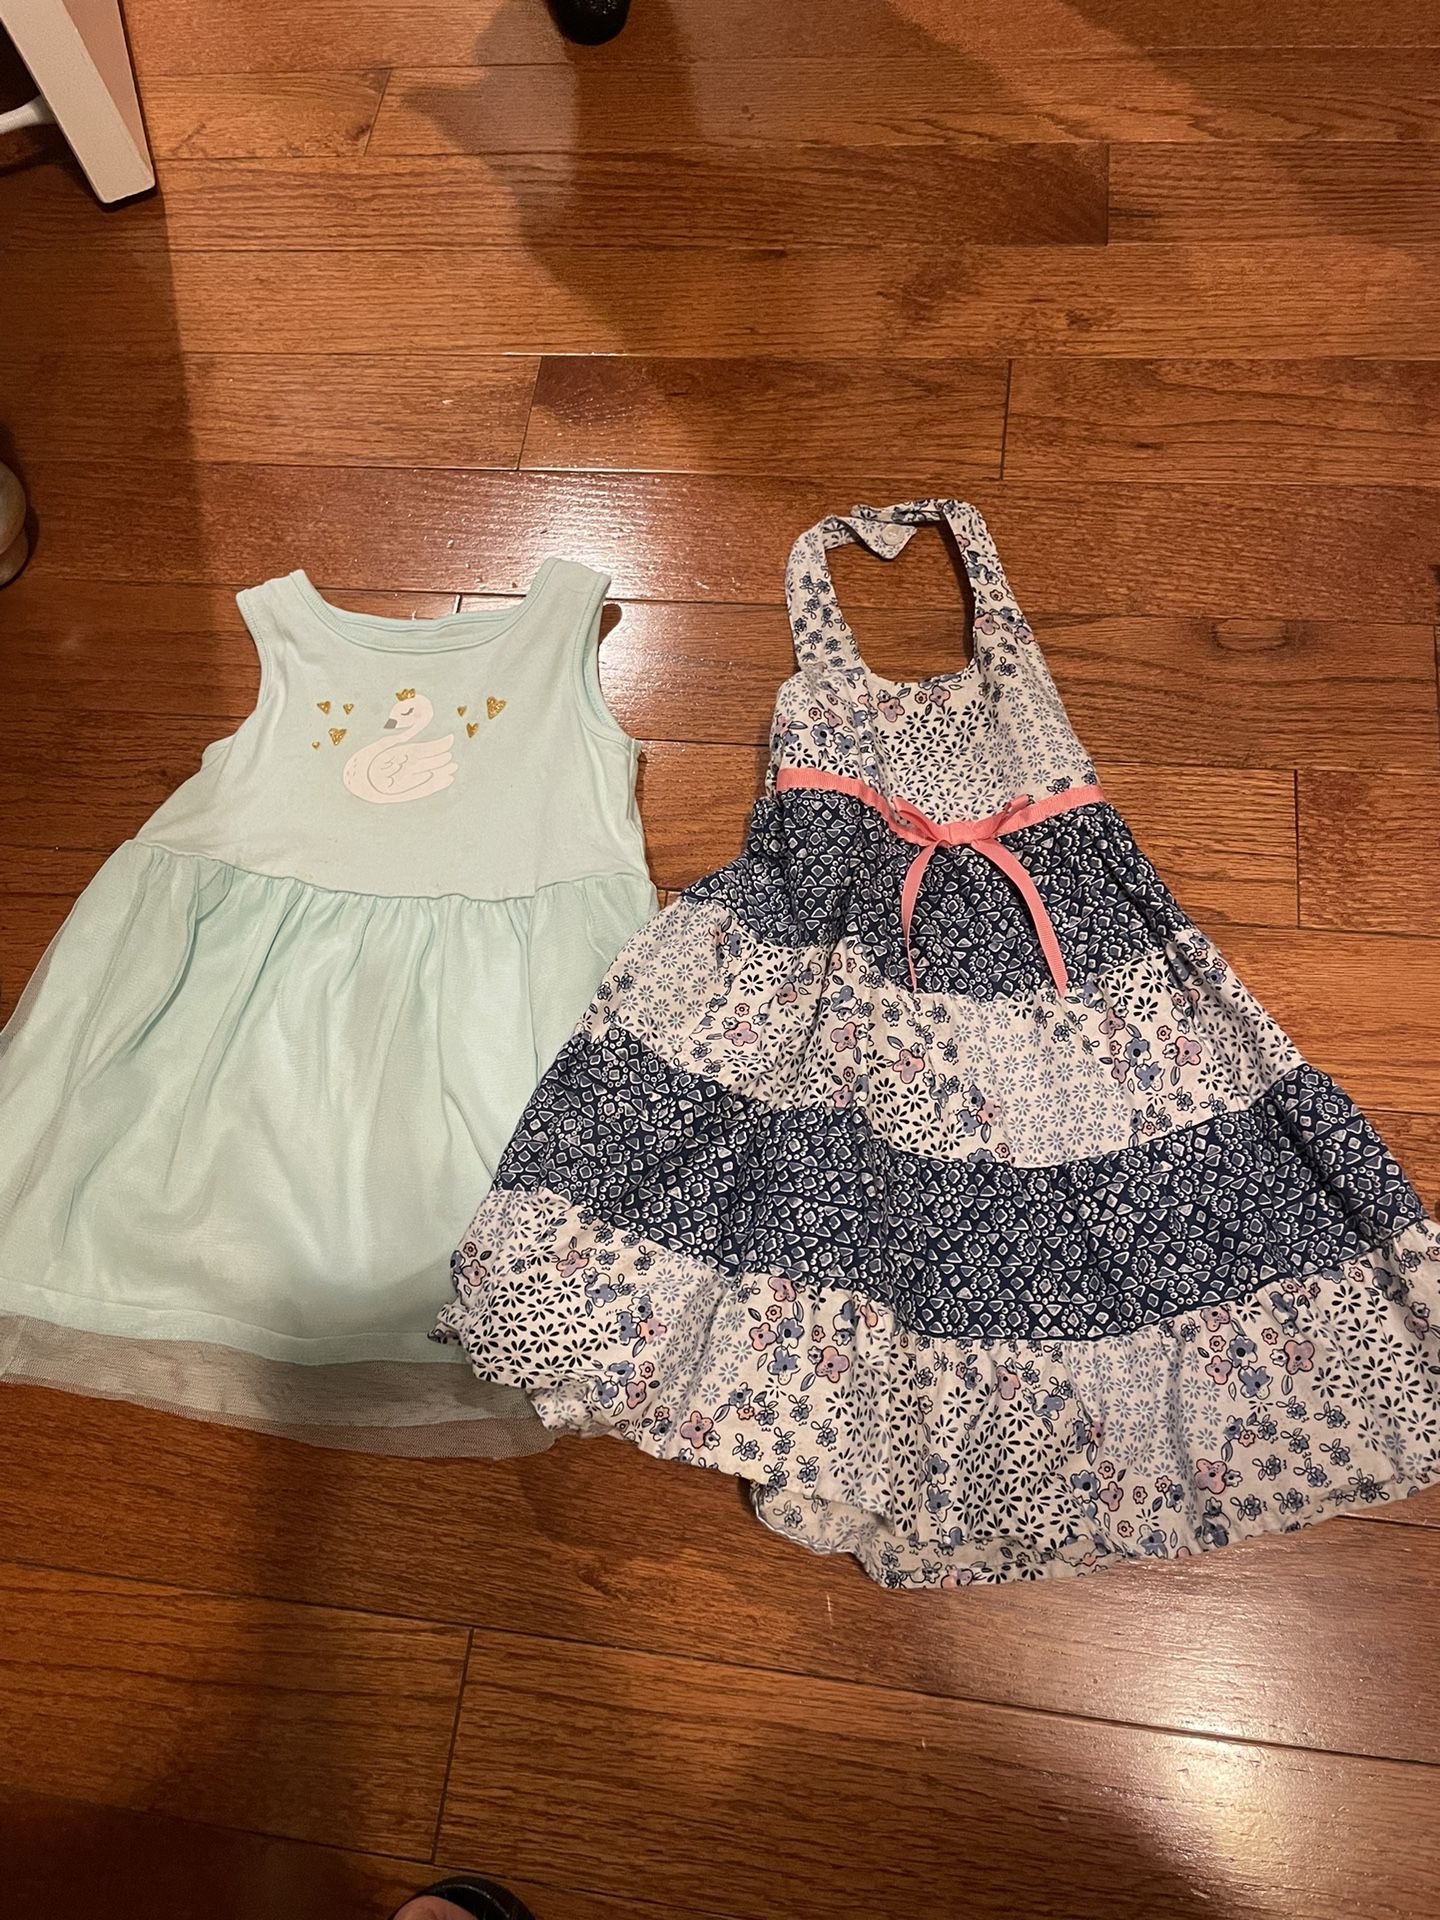 Two toddler girl summer dresses 24 months/carter’s and blueber boulevard